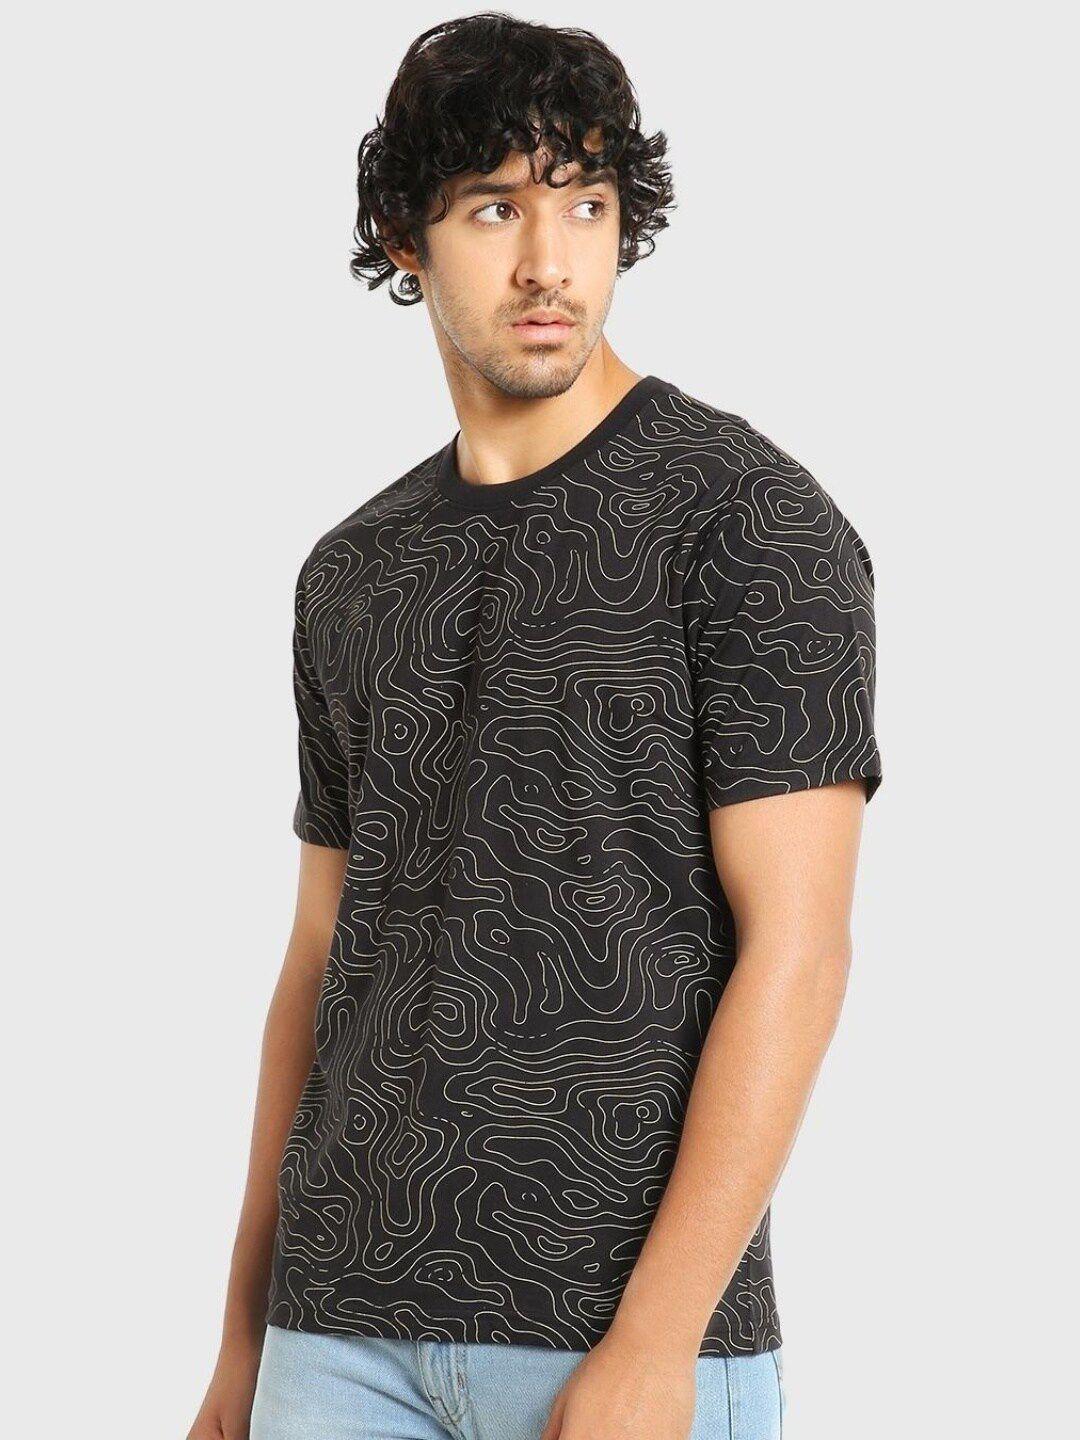 bewakoof-men-abstract-printed-cotton-t-shirt